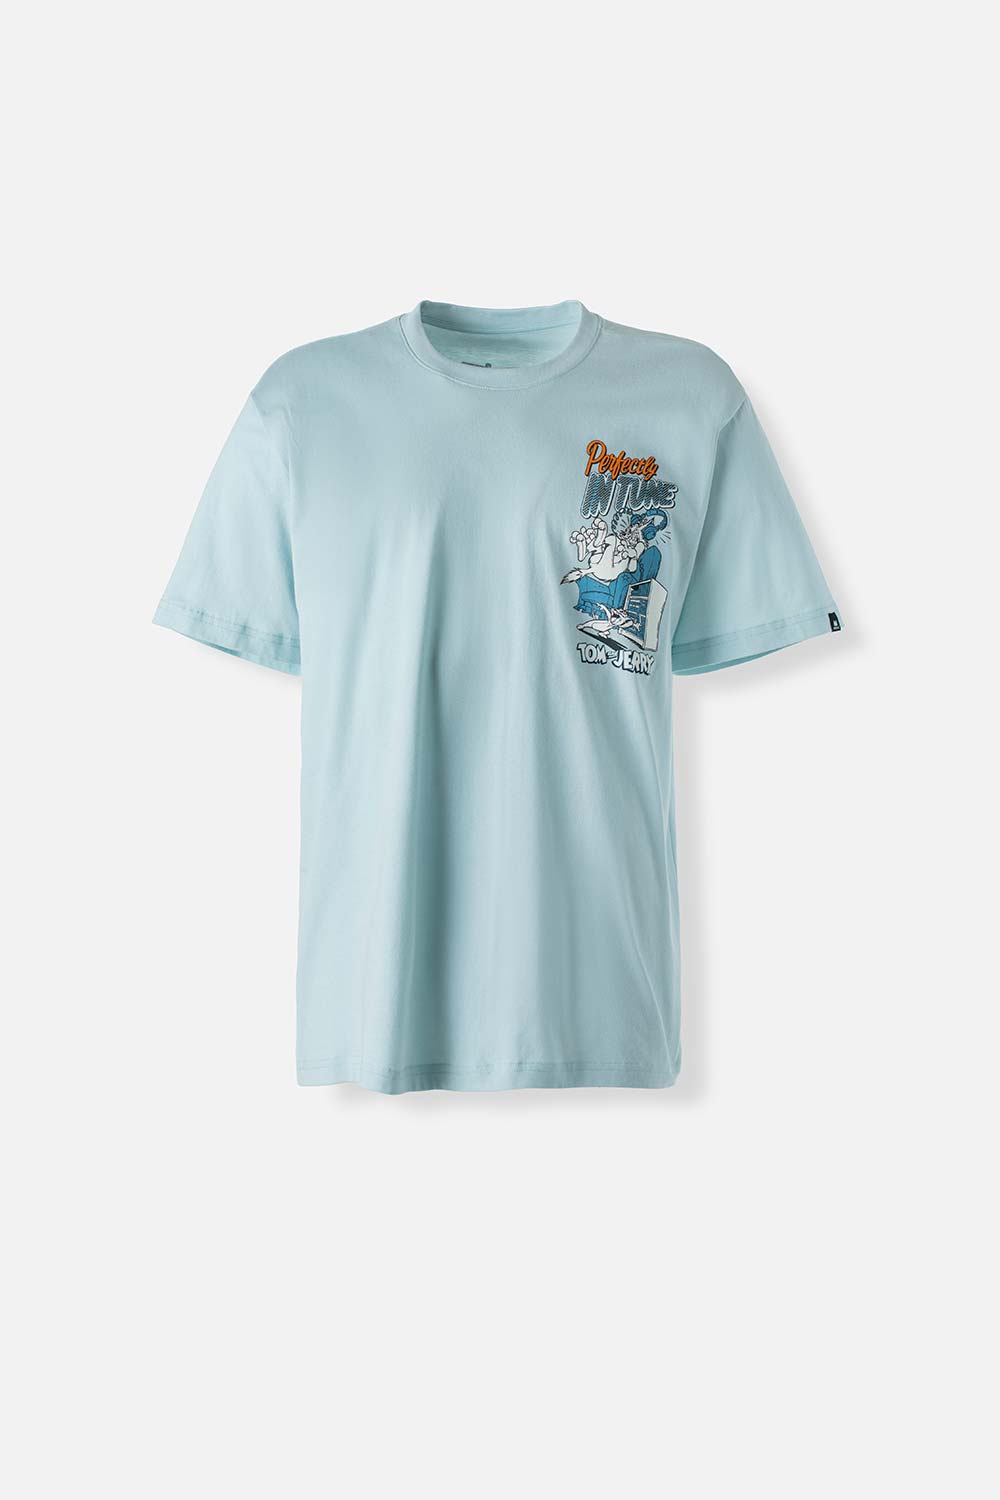 Camiseta de Tom & Jerry manga corta azul grisáceo género neutro XS-0